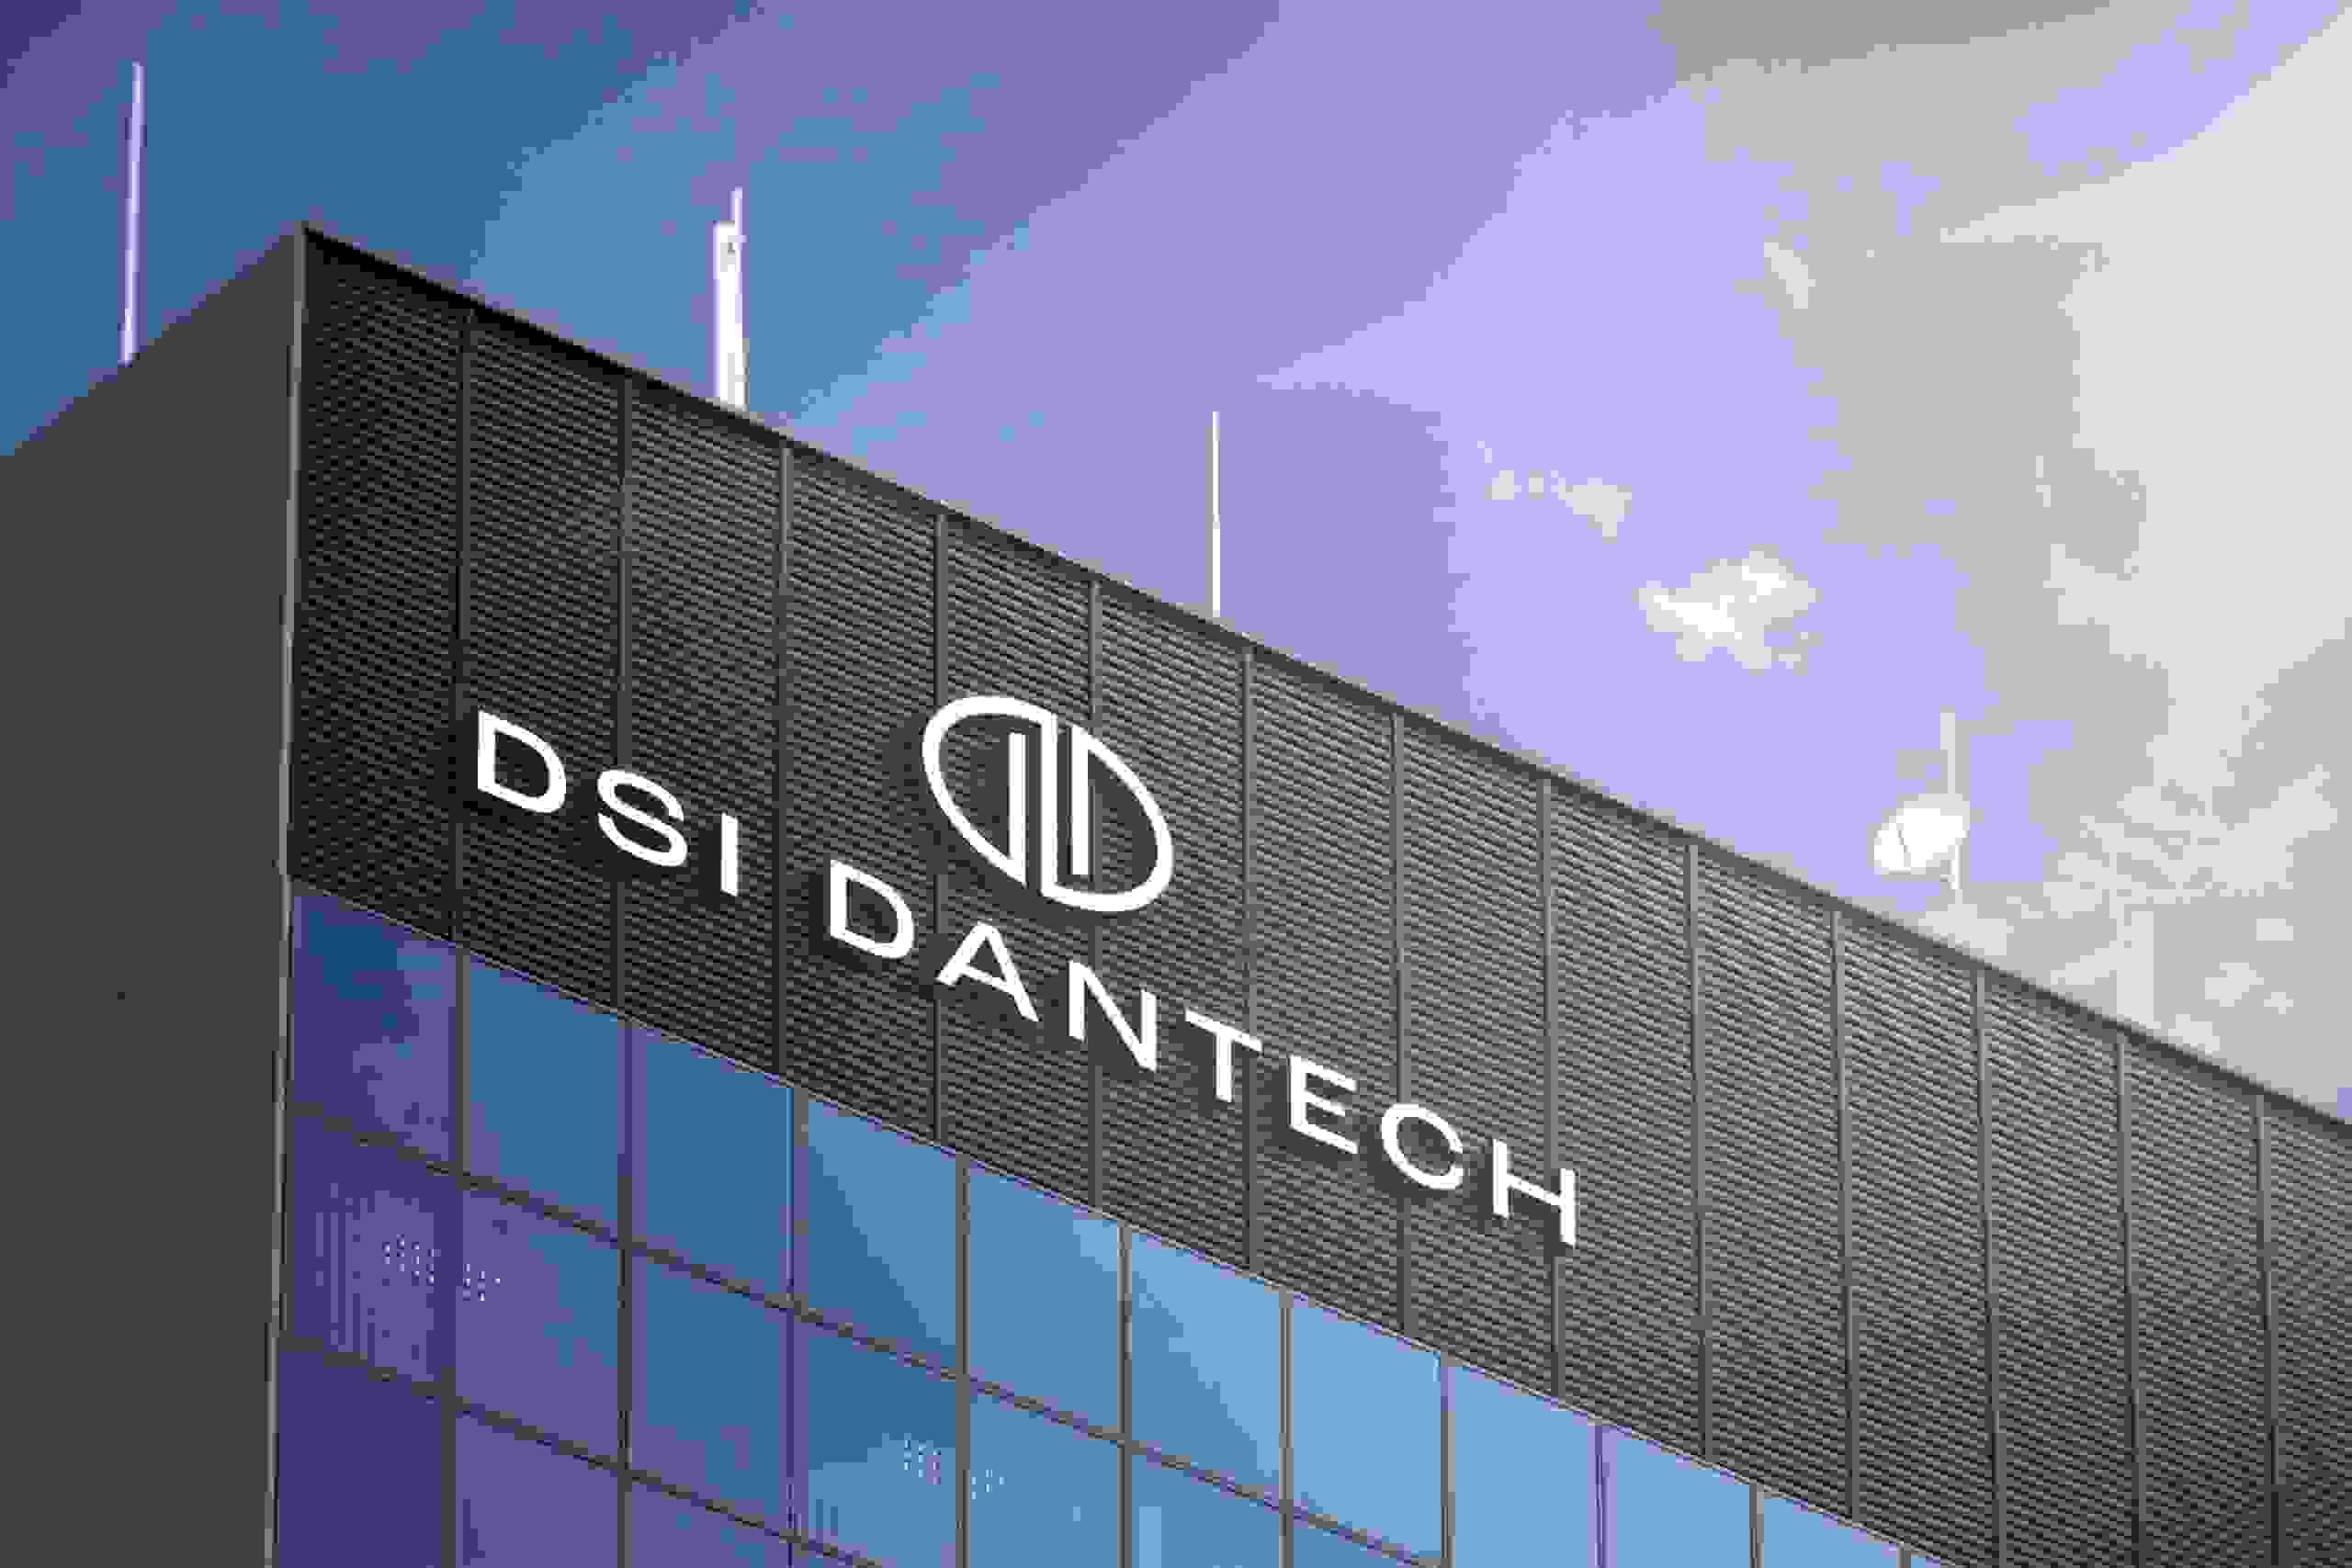 Headquarters at DSI Dantech